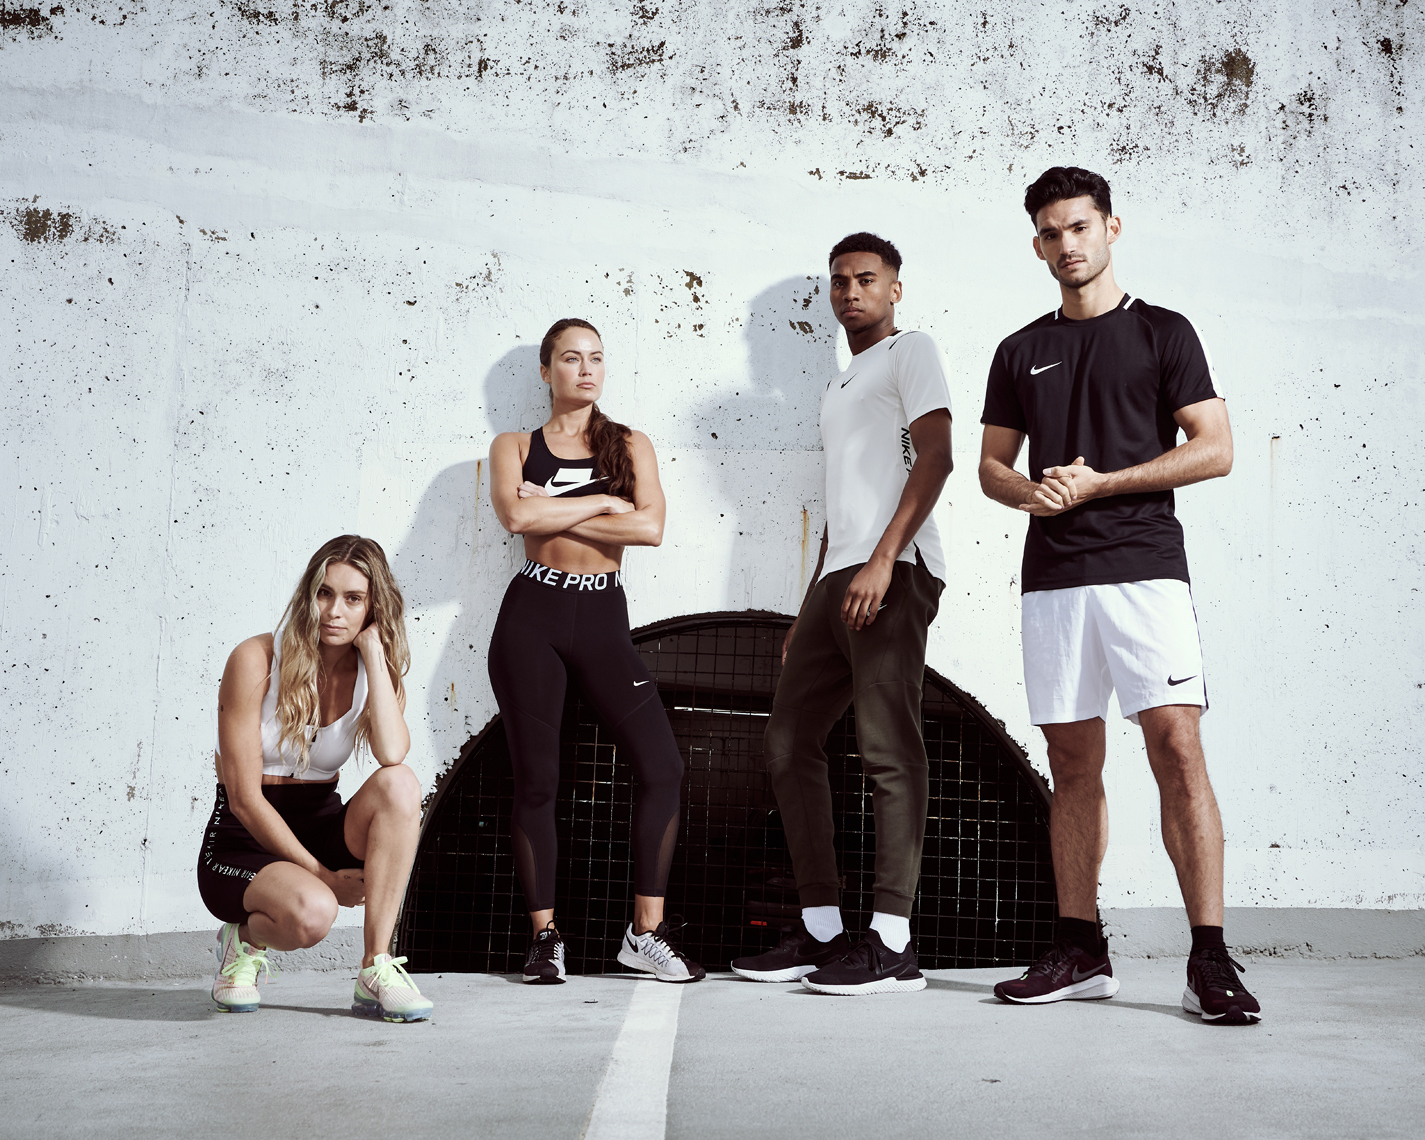 2019-Vancouver-SportsandFitness-Photographer-ErichSaide-Advertising-Nike-RichardsModels-Lifestyle-Team